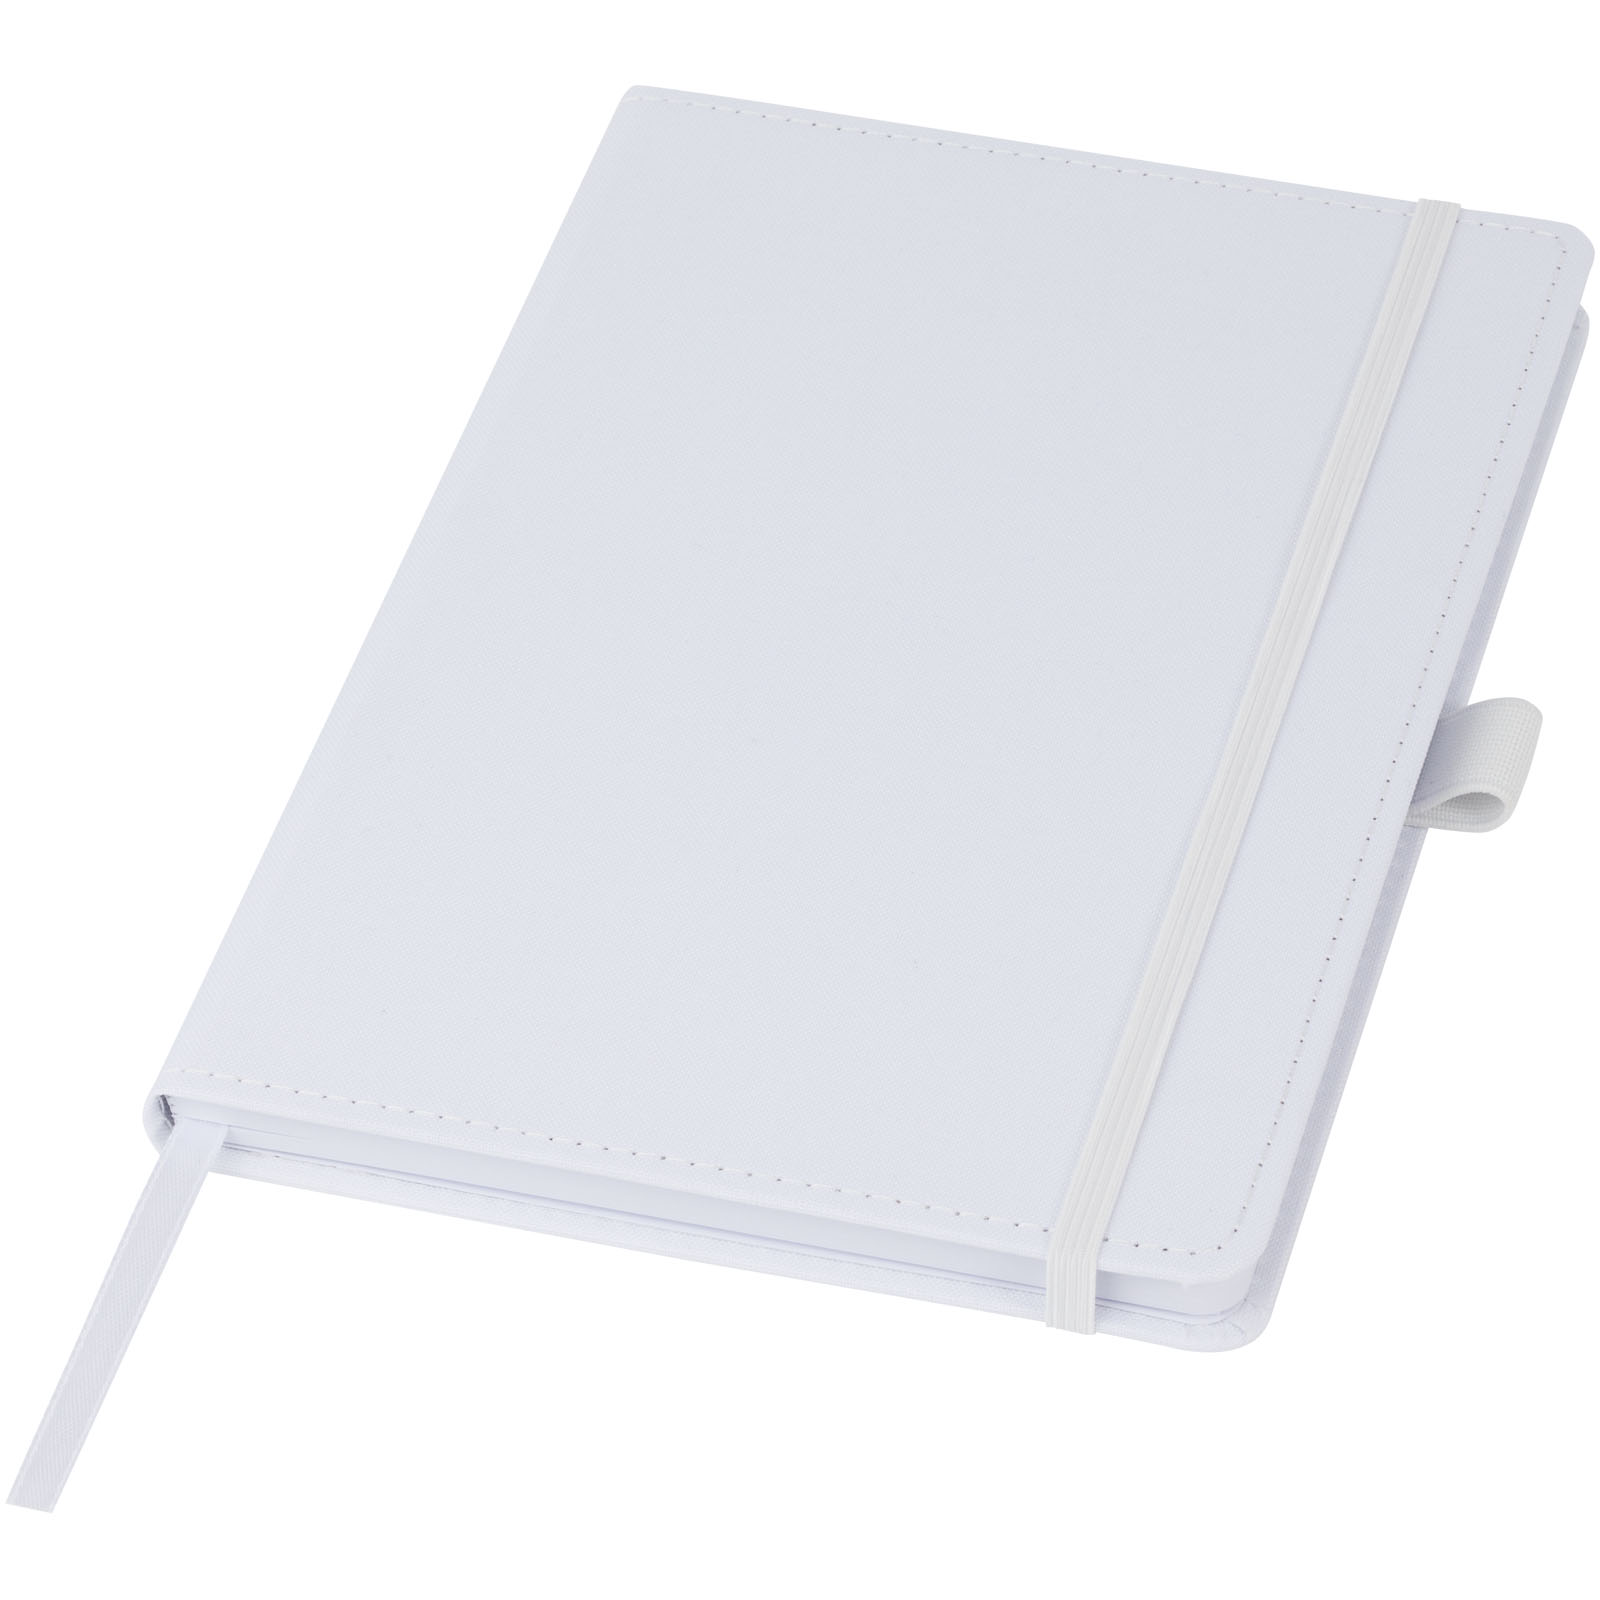 Advertising Hard cover notebooks - Thalaasa ocean-bound plastic hardcover notebook